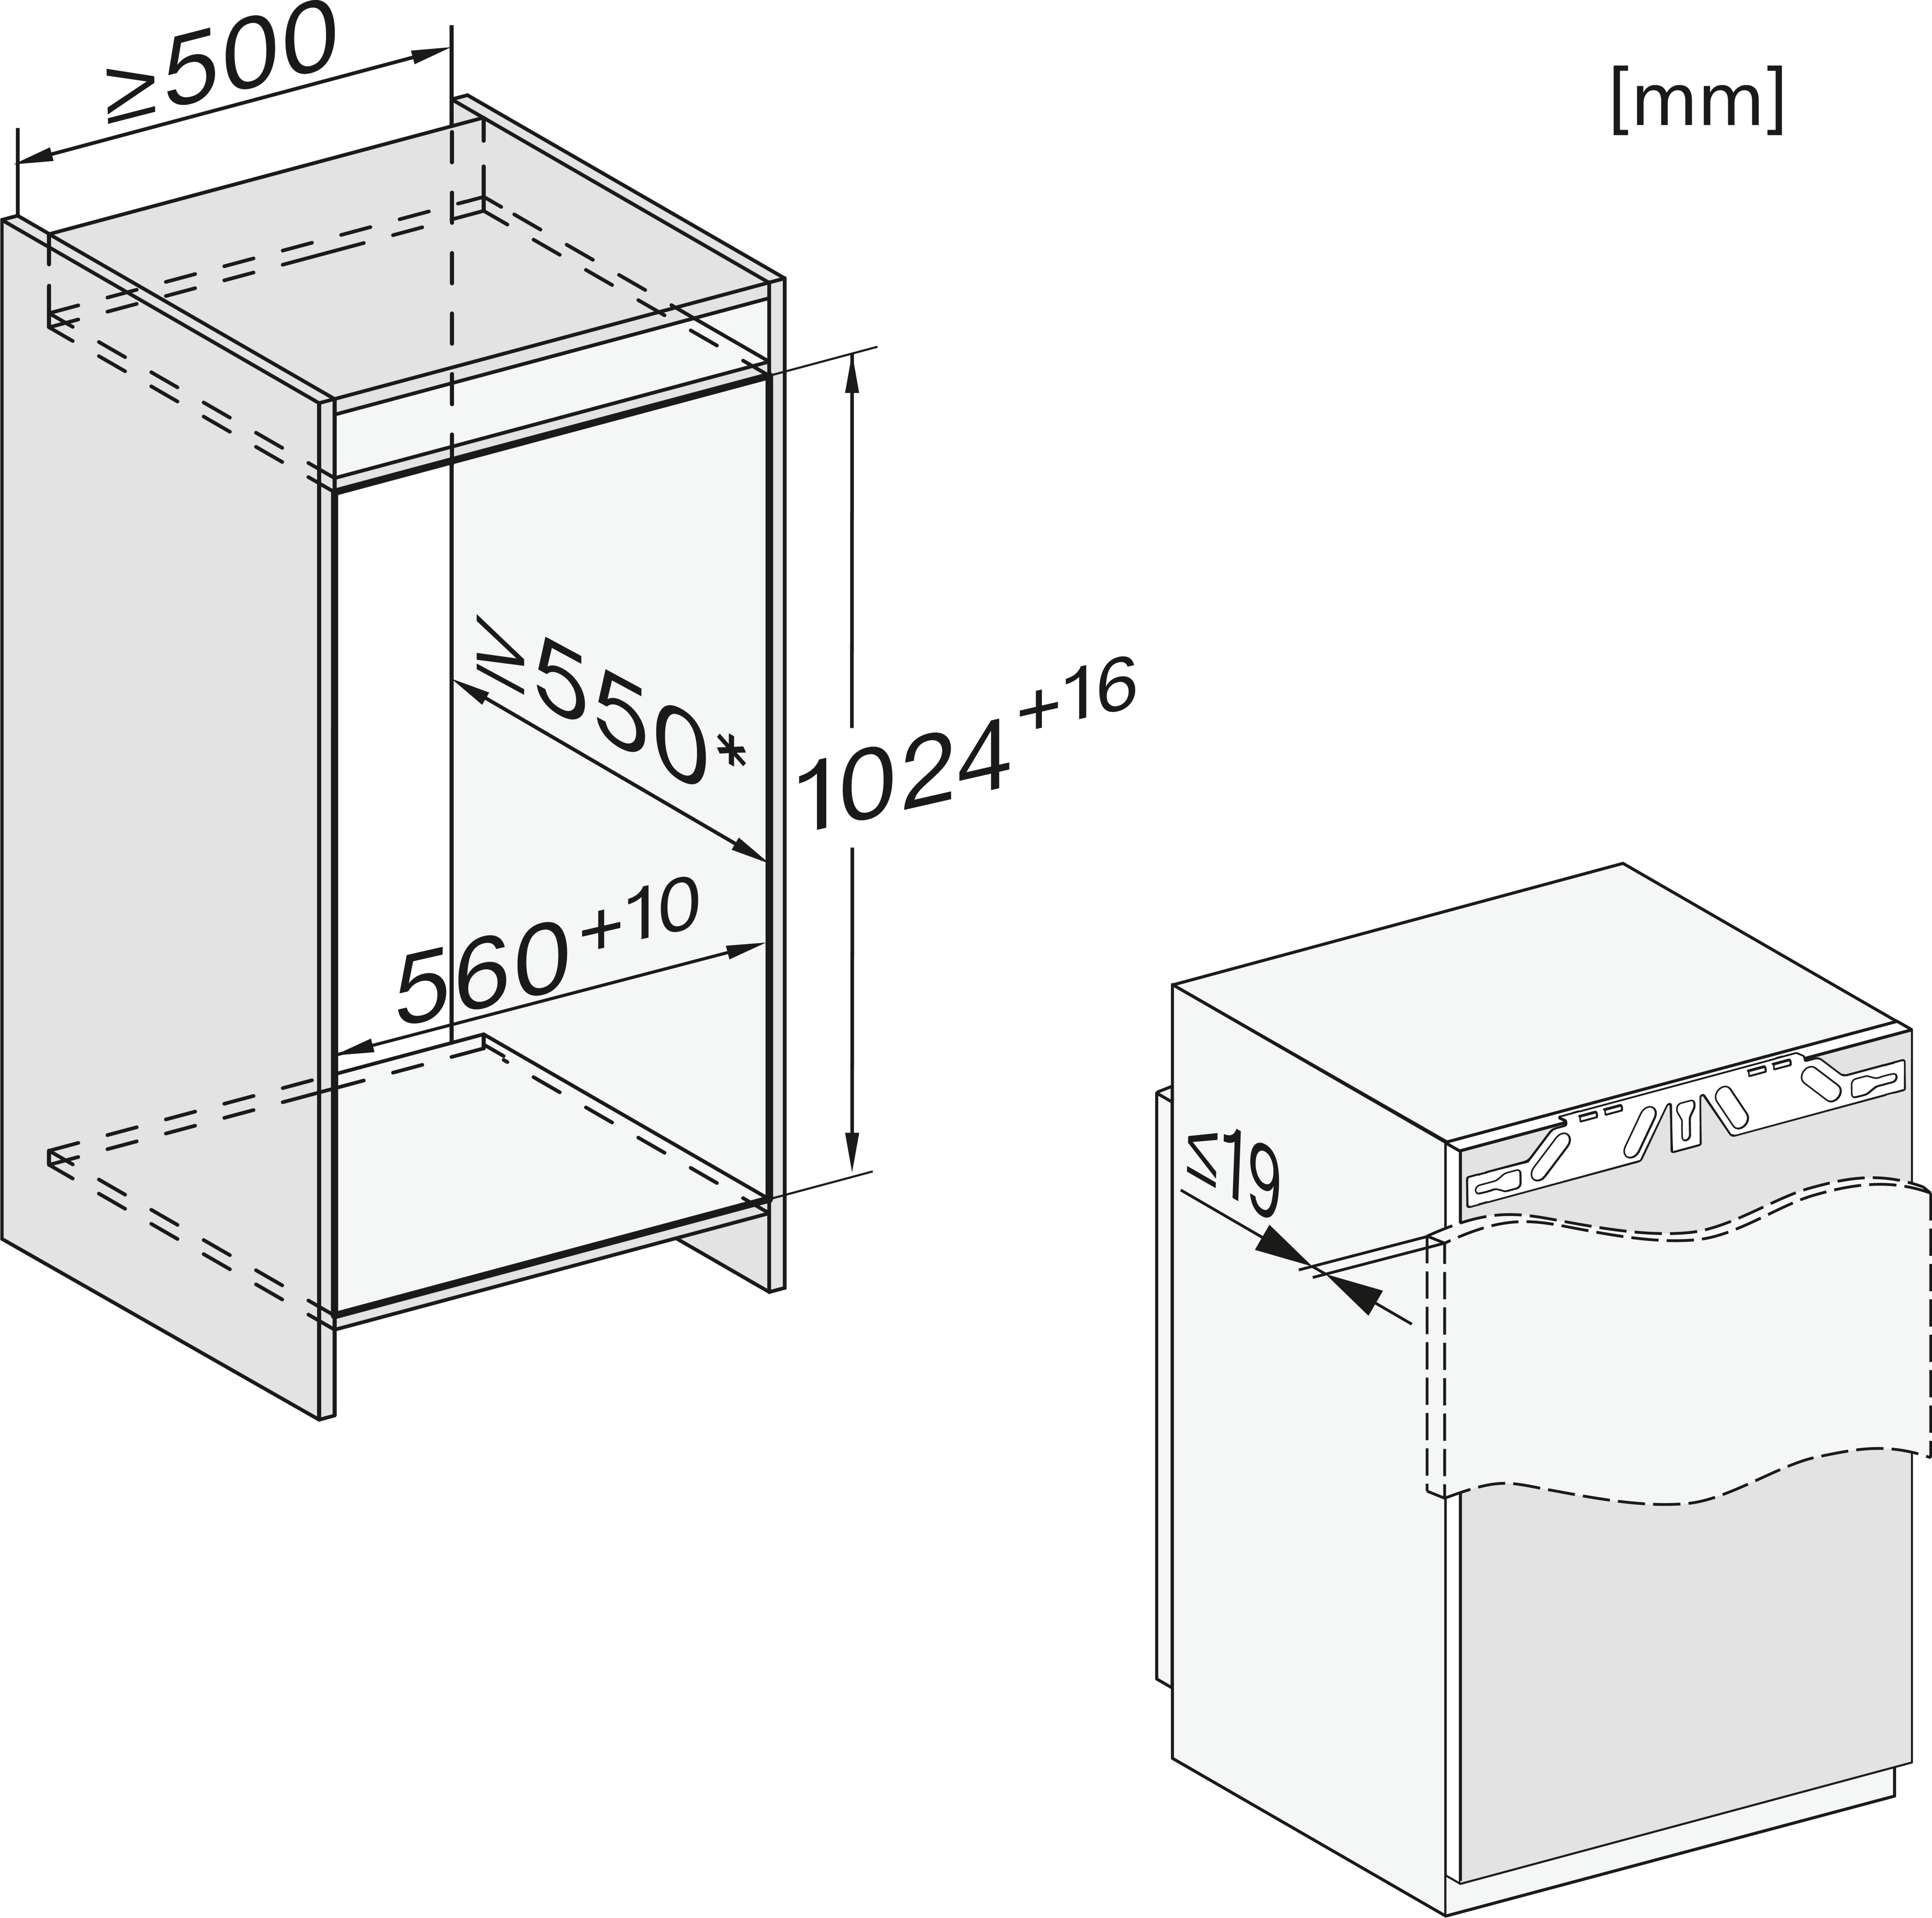 Maattekening MIELE koelkast inbouw K7234E